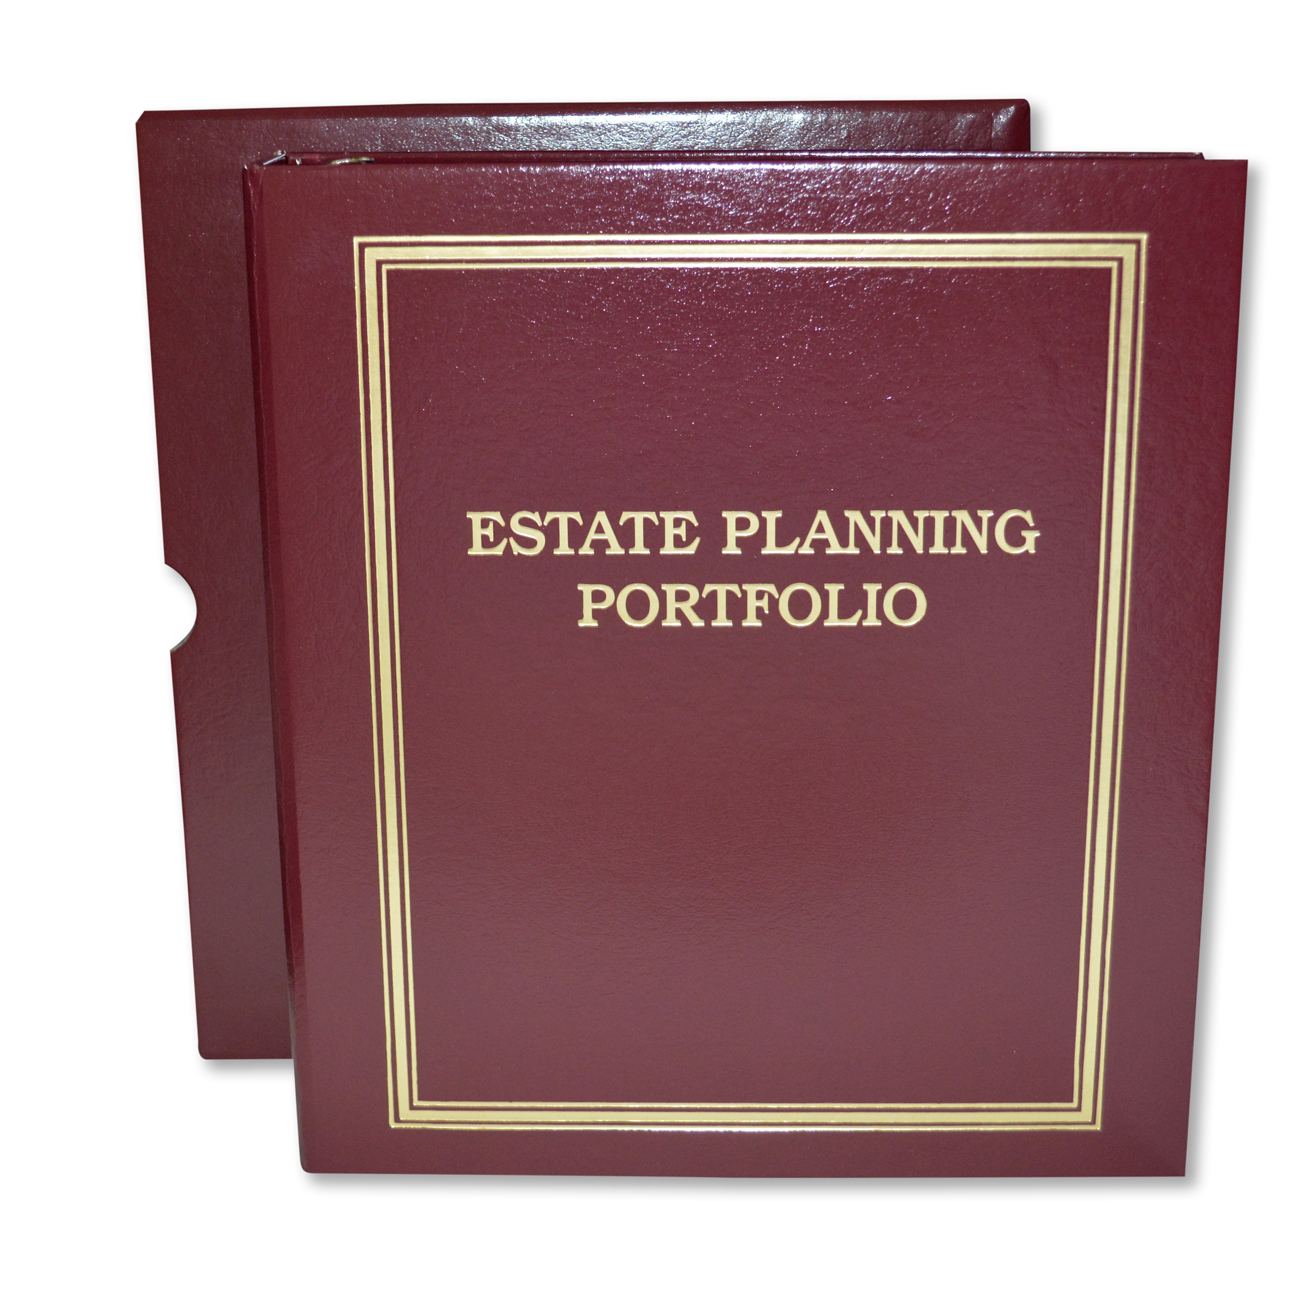 Estate Planning Portfolio Maroon Binder, Foil-Stamped "Estate Planning Portfolio", 1/EA